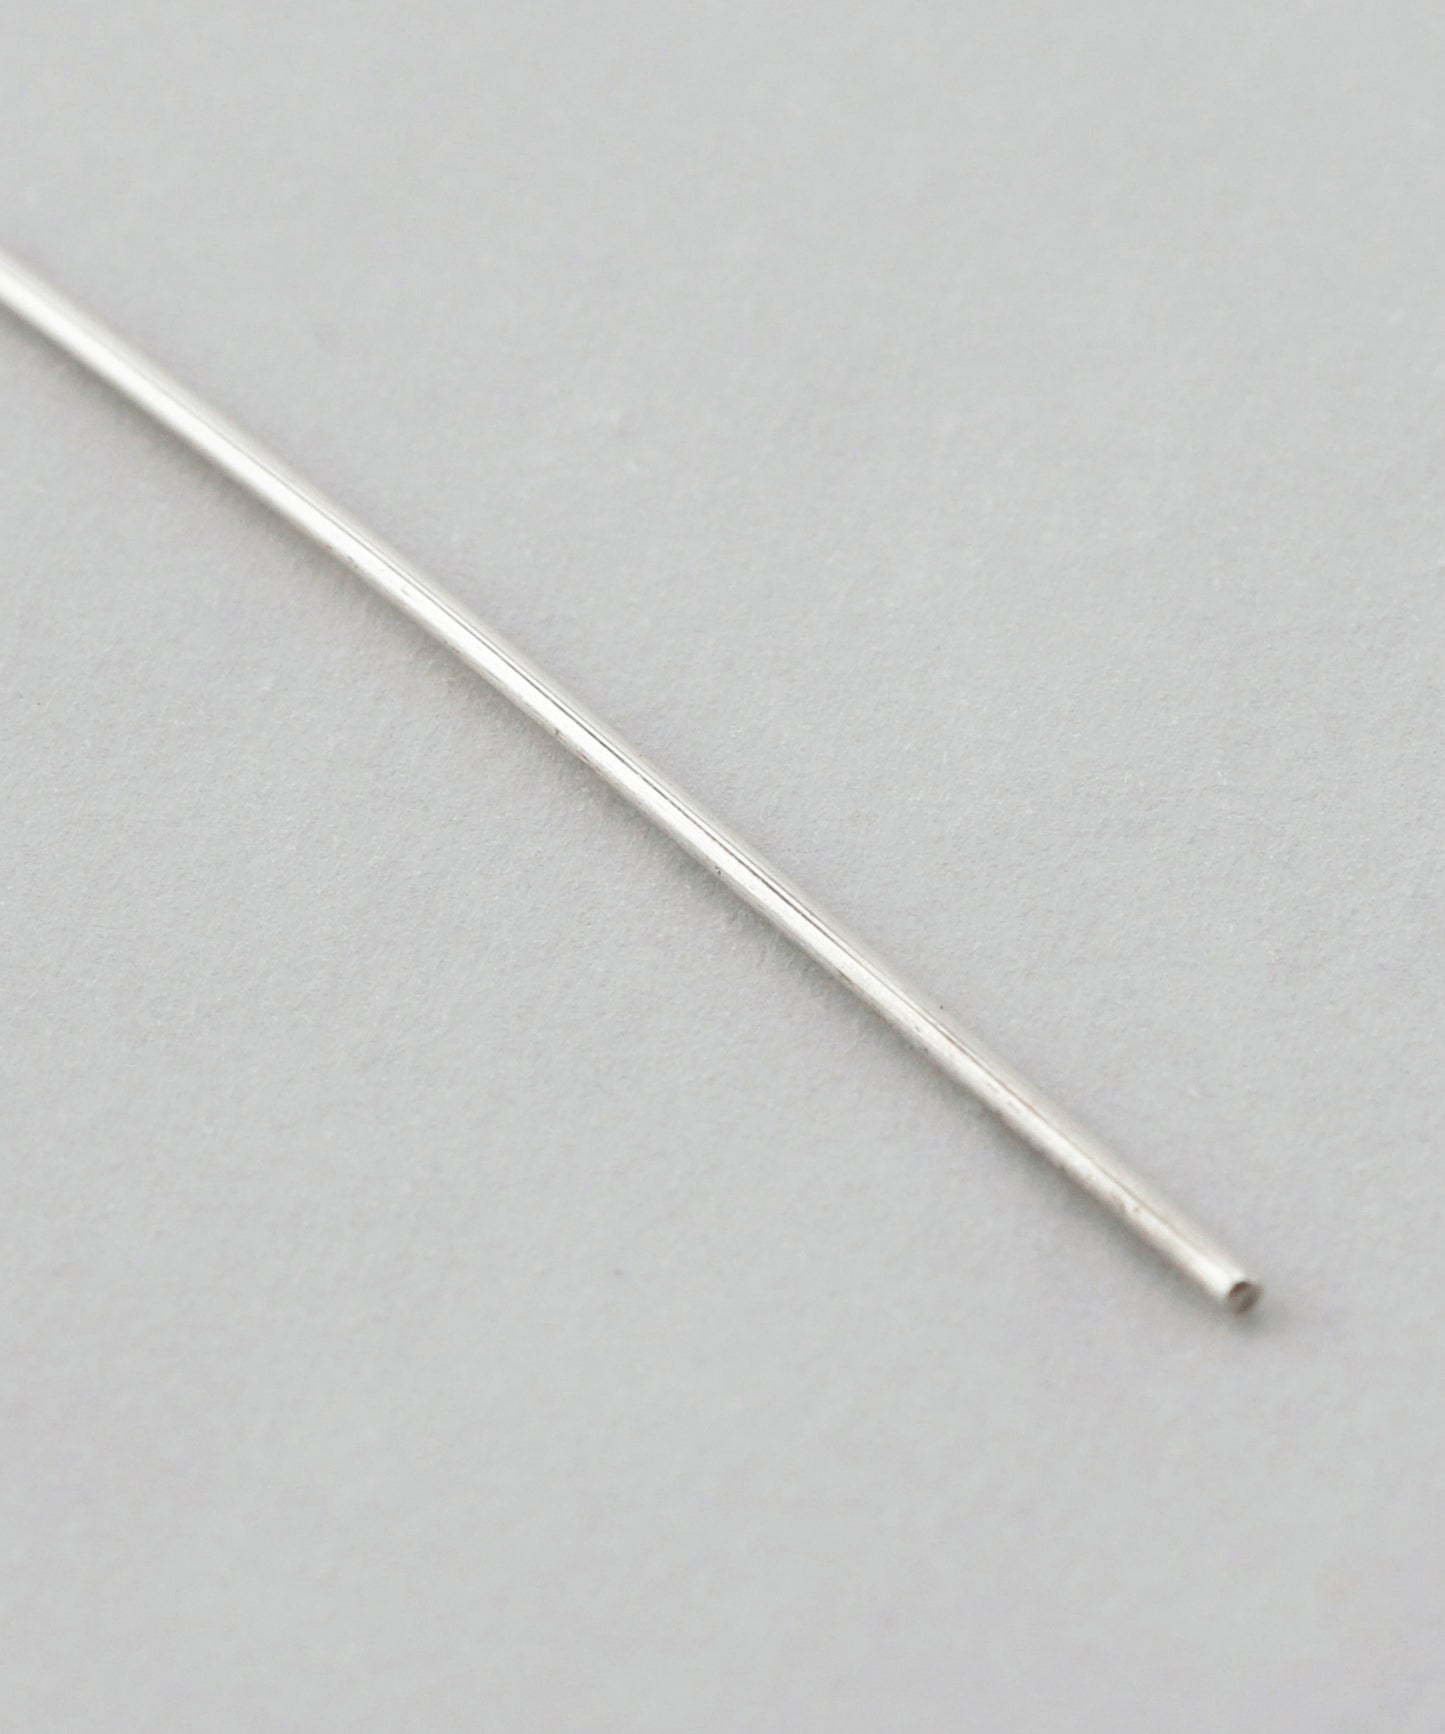 Shell Pearl Long Earrings[925 silver][Basic]